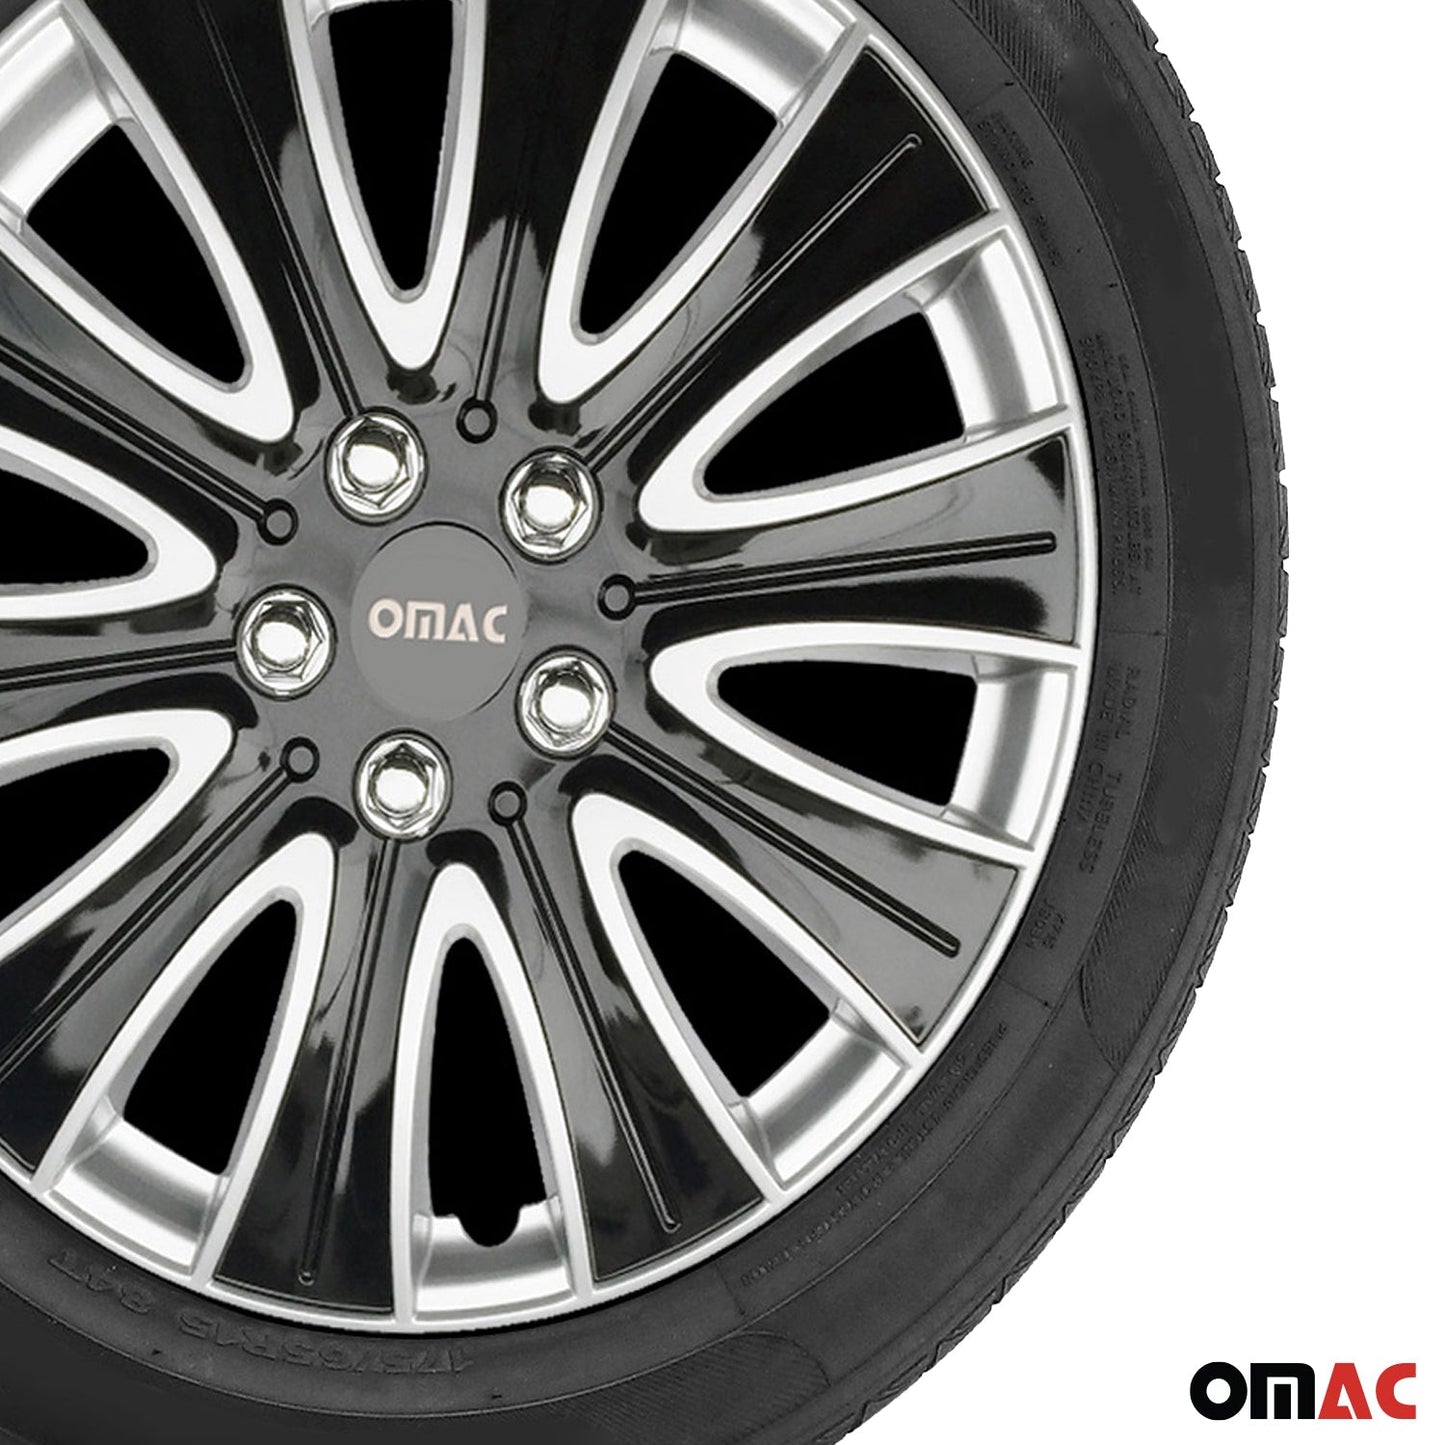 OMAC 15" Wheel Covers Guard Hub Caps Durable Snap On ABS Silver Black 4x OMAC-WE40-SVBK15